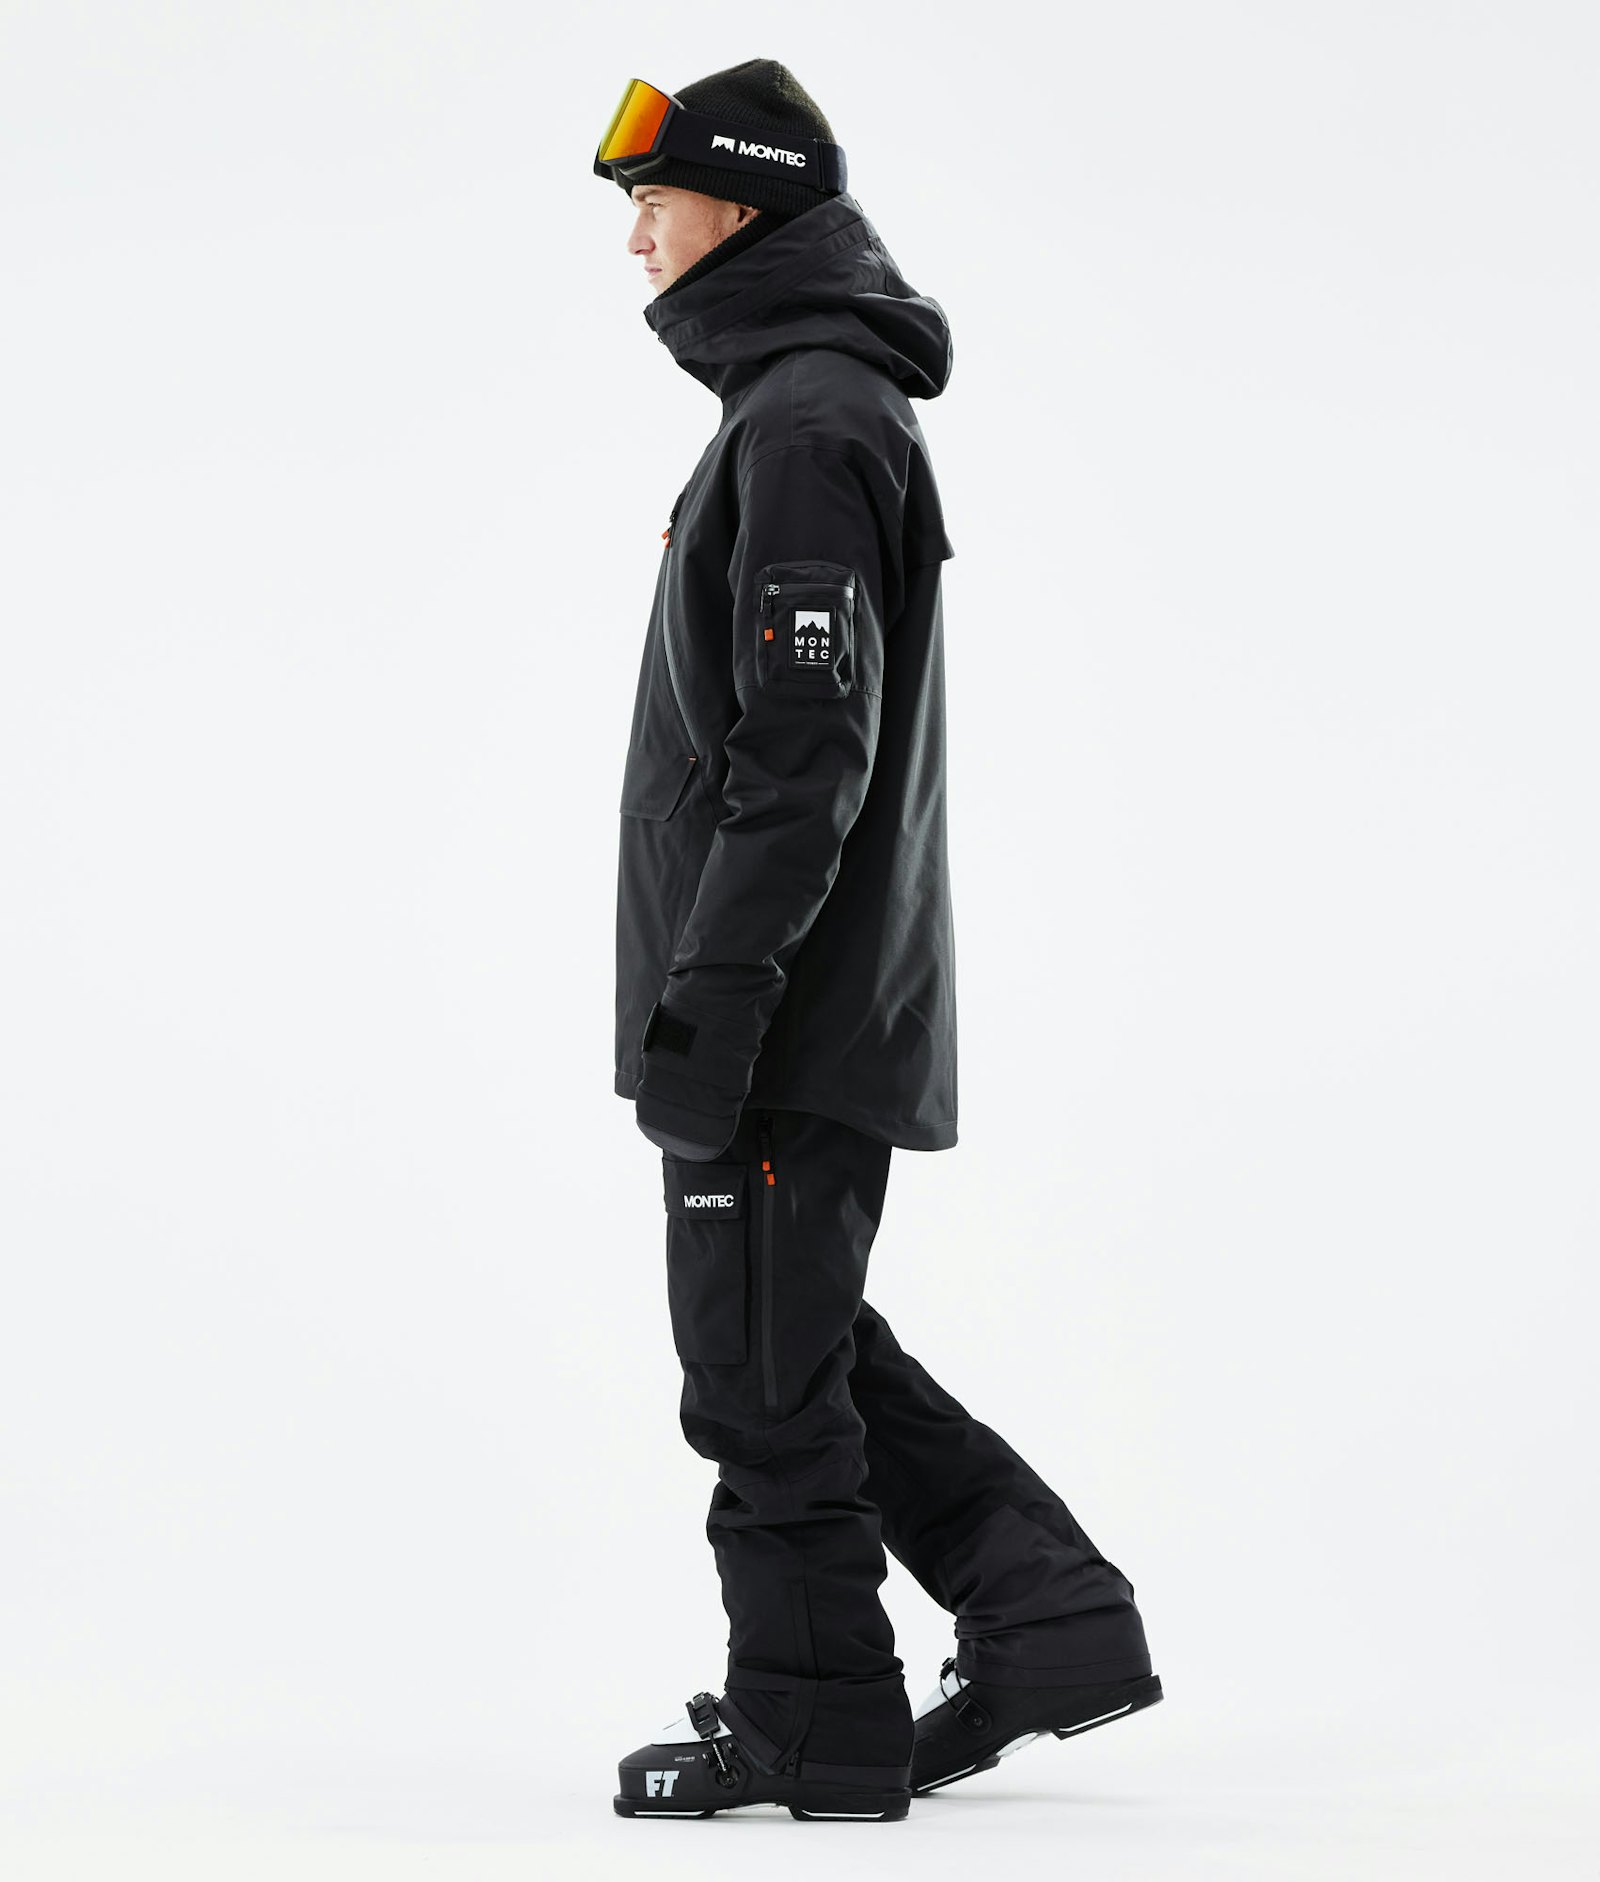 Montec Anzu Ski Jacket Men Black